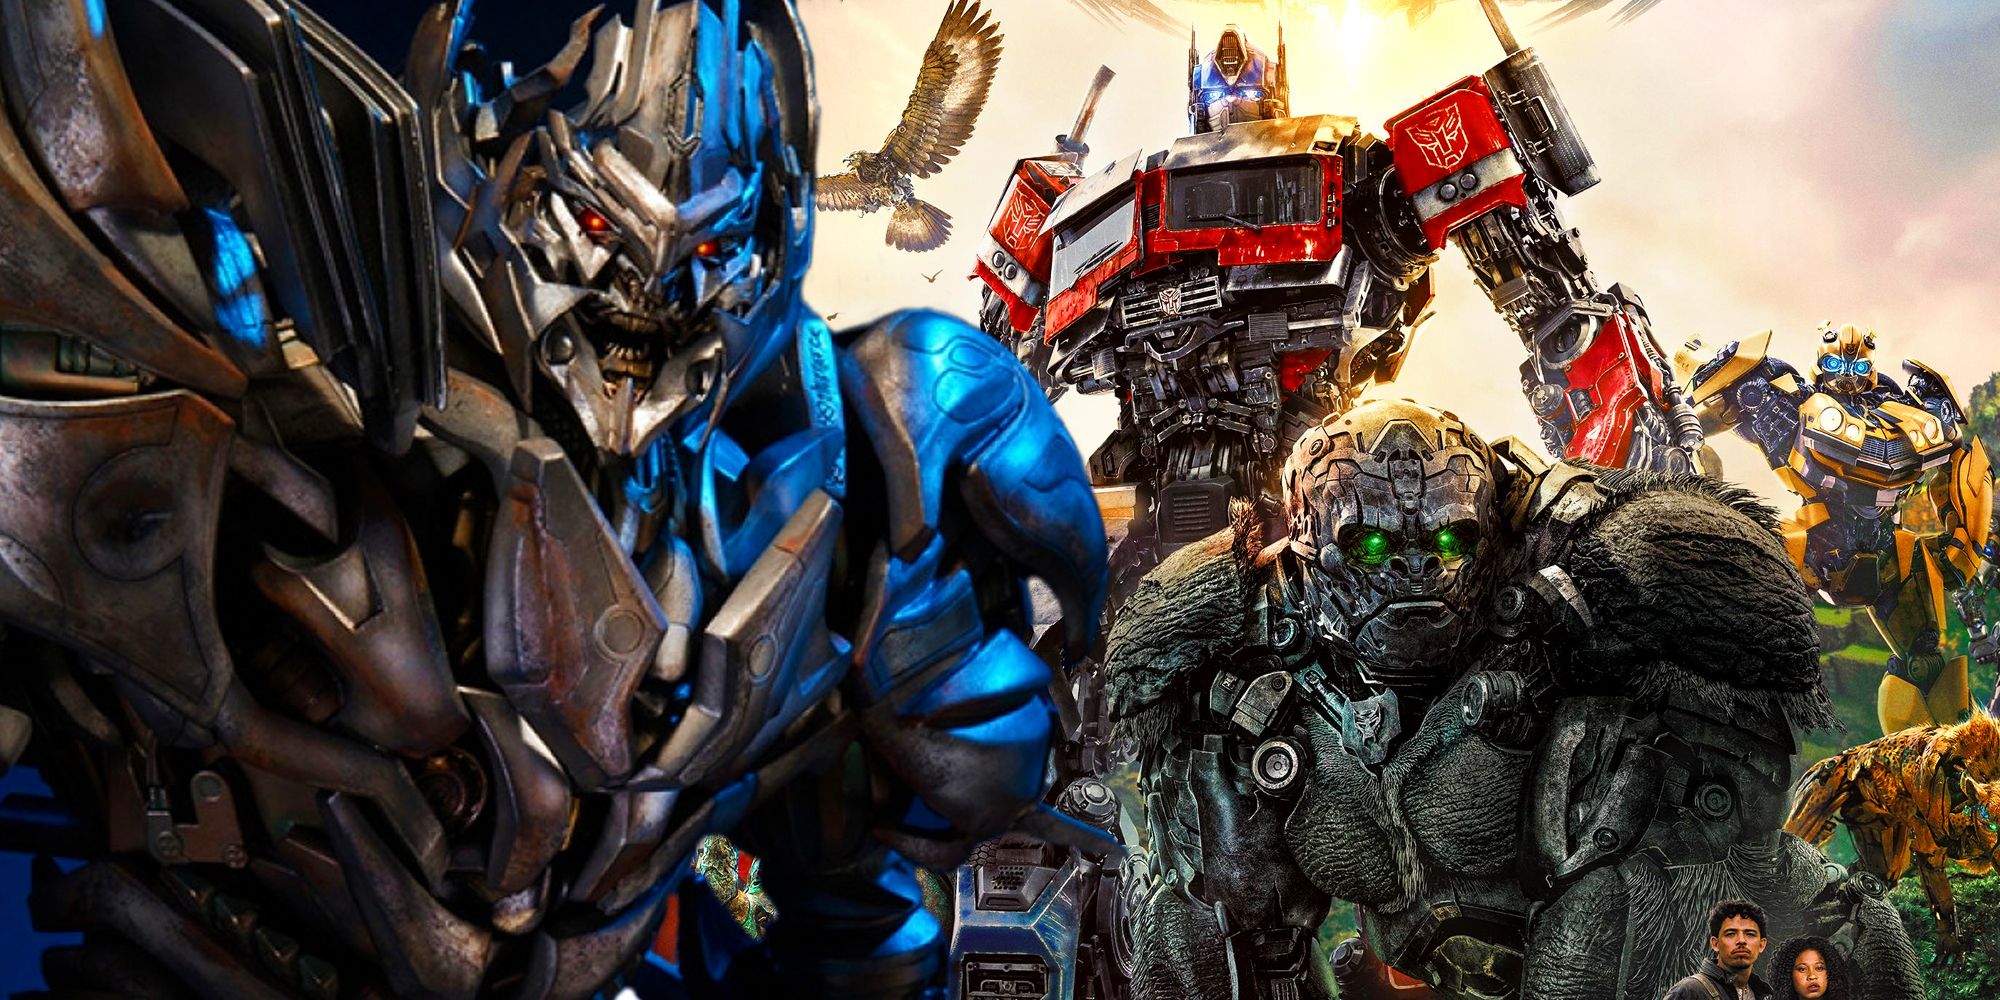 Megatron Will Return in 'Transformers: The Last Knight